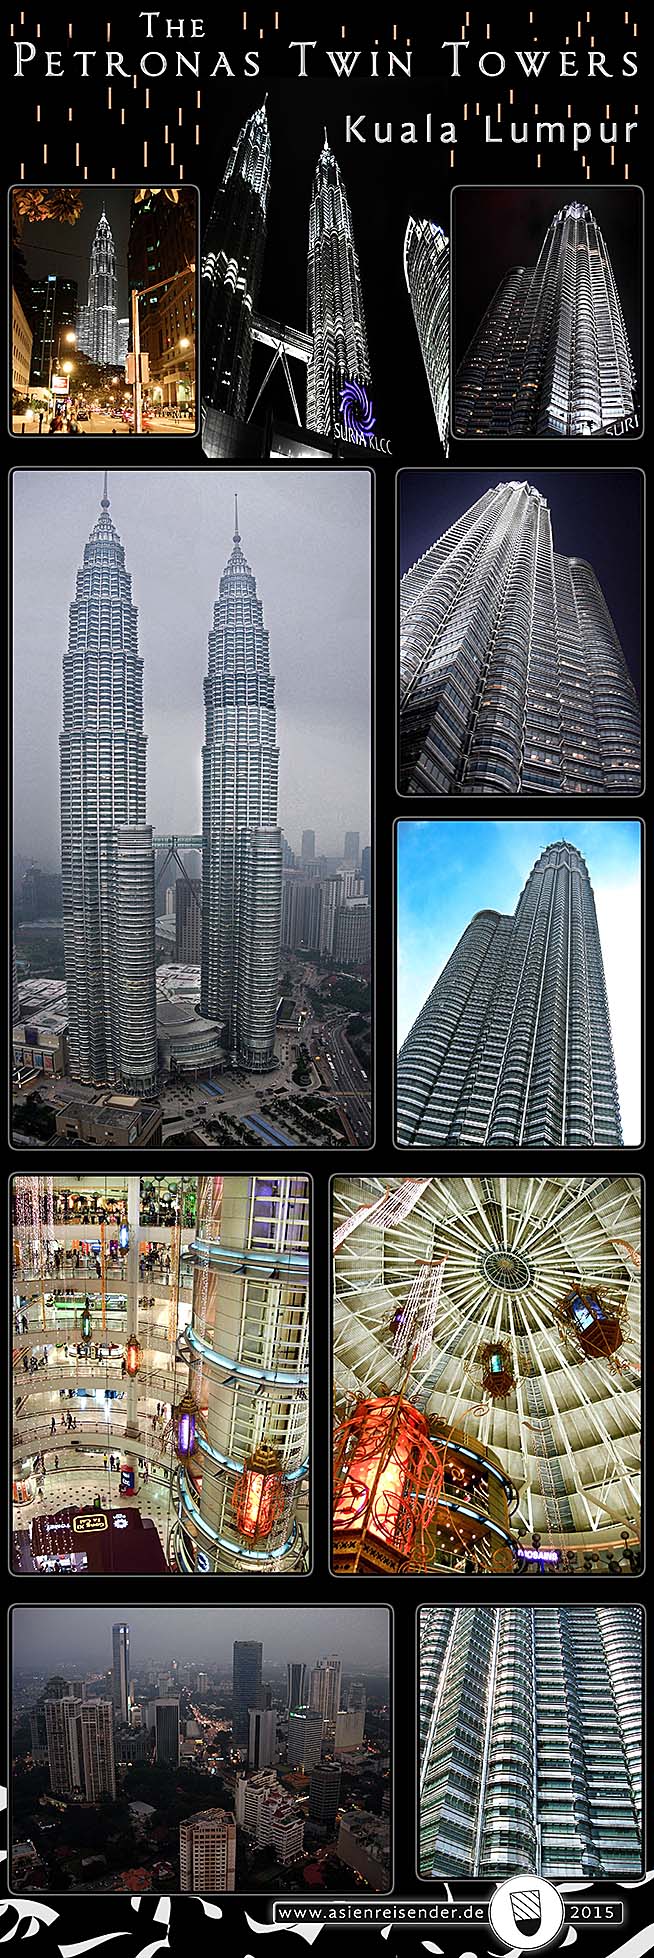 'Photocomposition Petronas Twin Towers, Kuala Lumpur' by Asienreisender